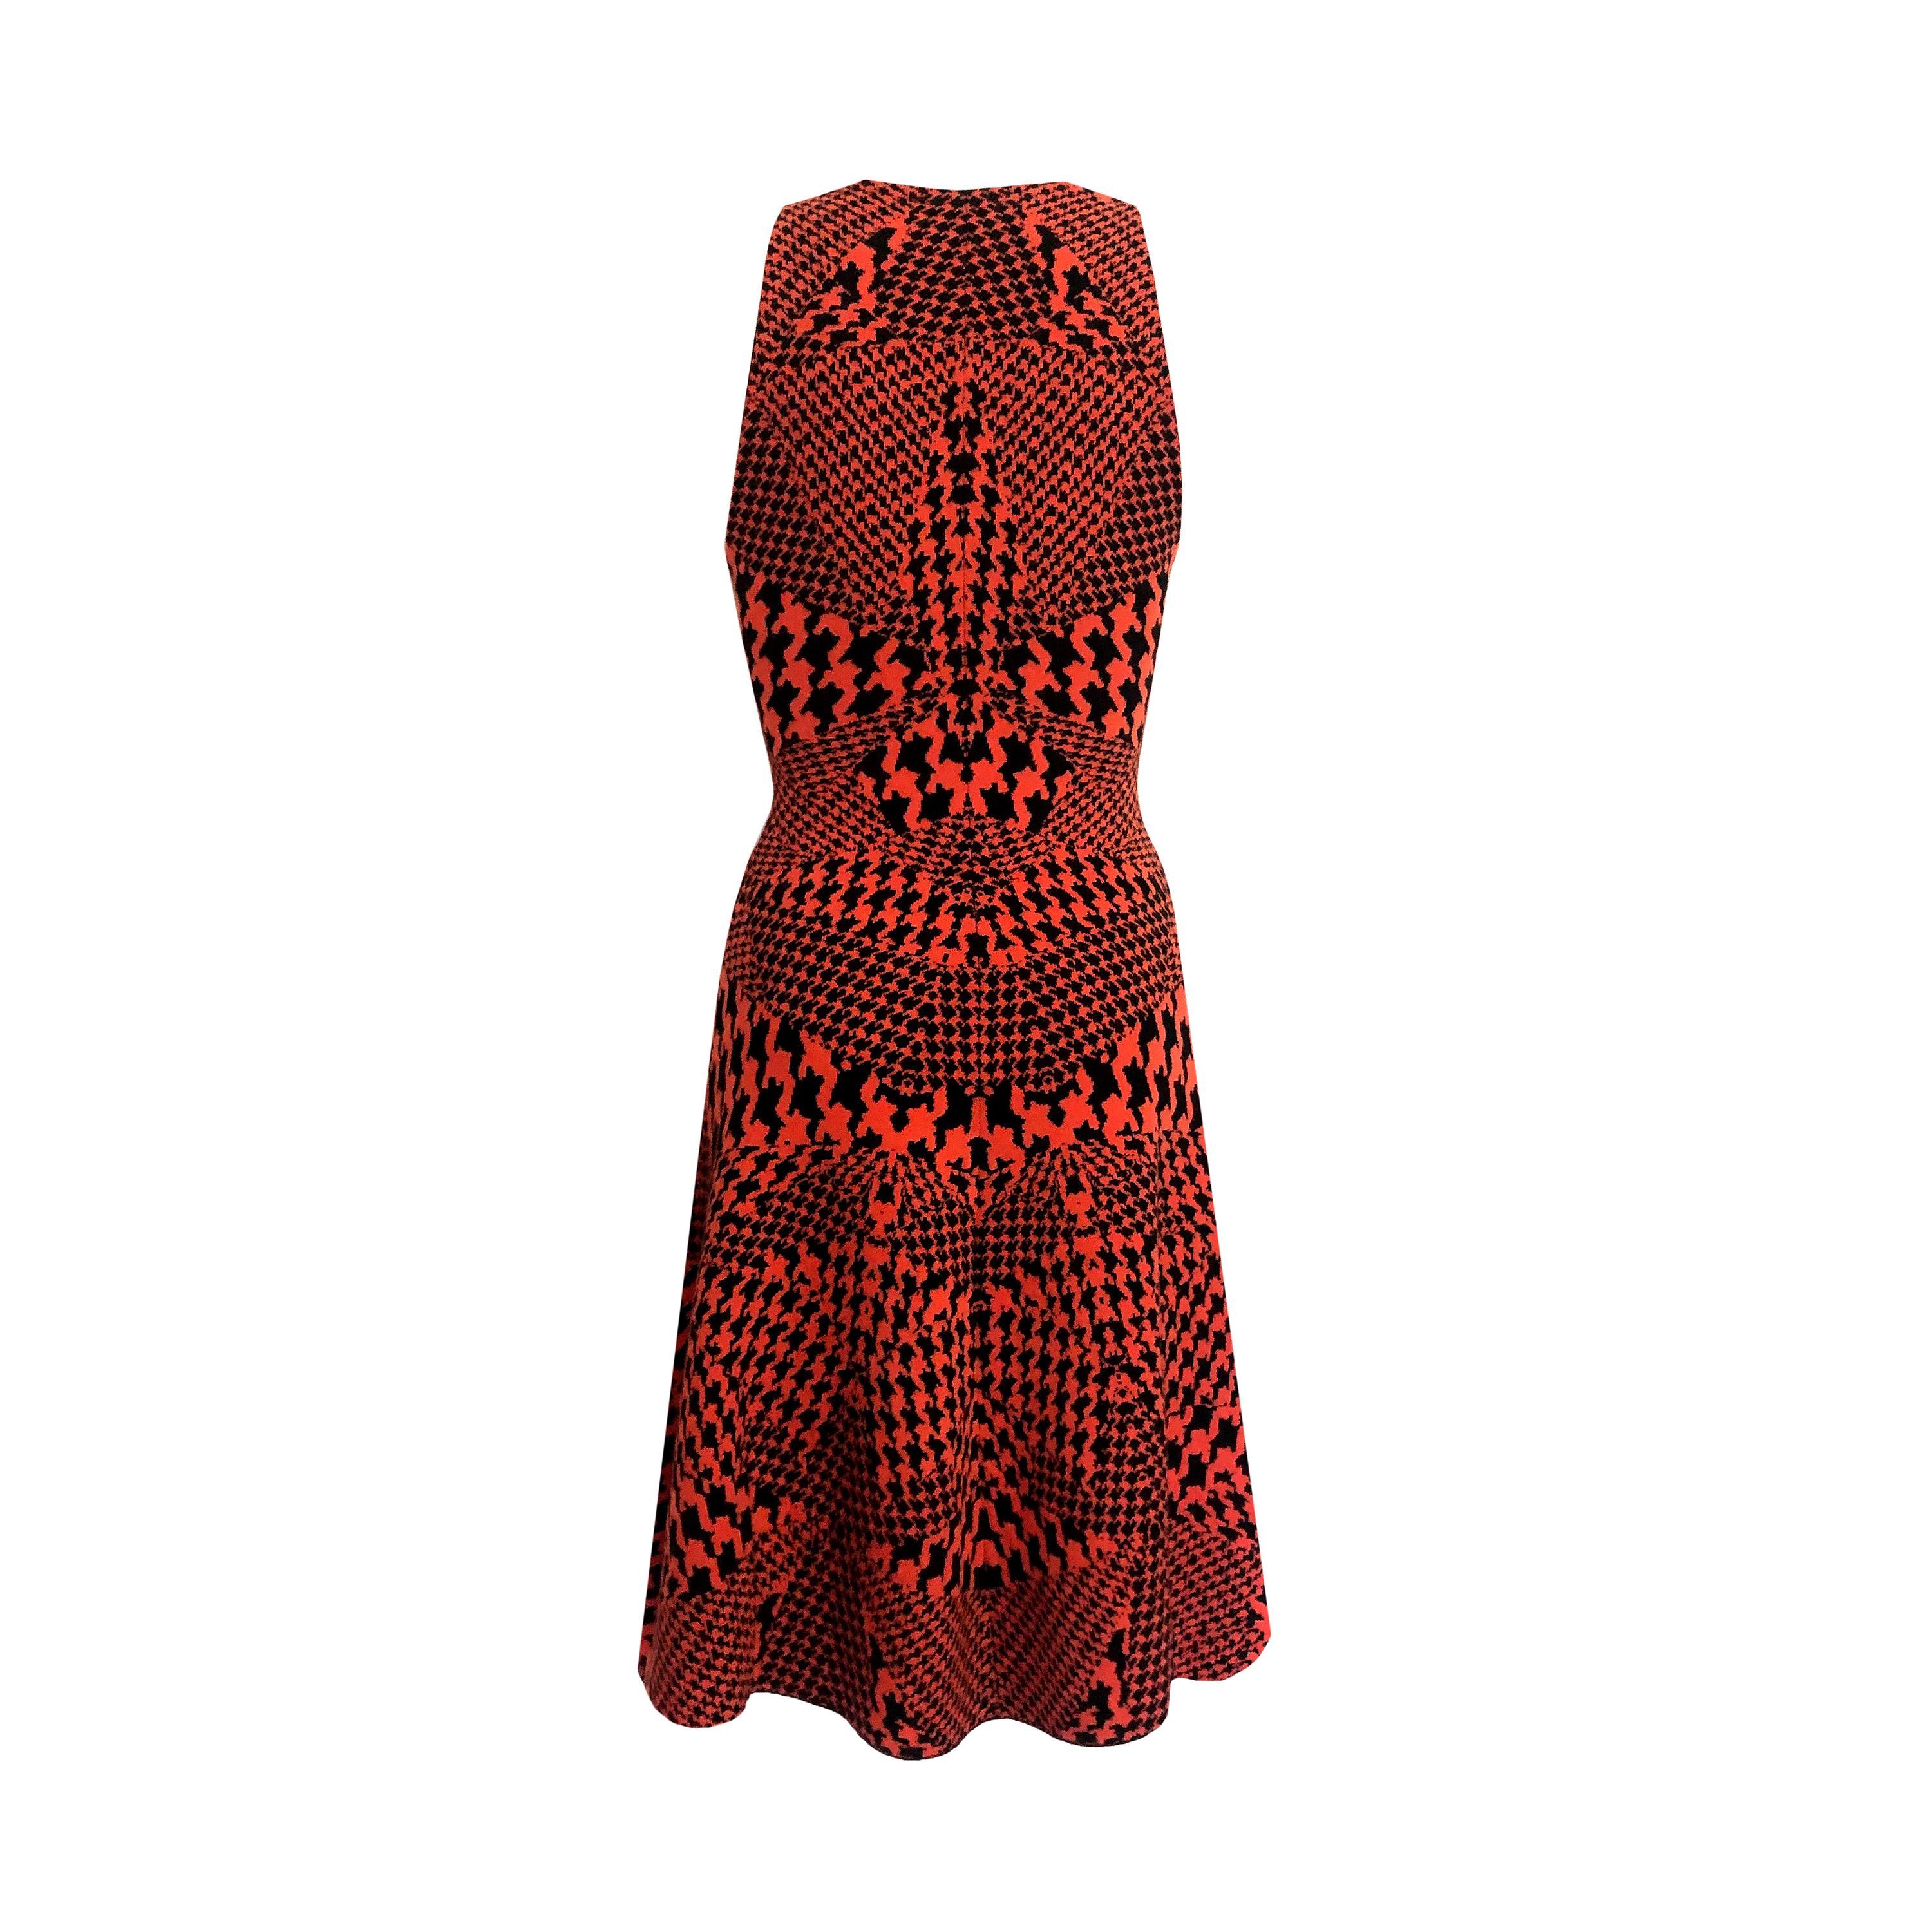 Alexander McQueen Dress - Multi Dogtooth Knit - Burnt Orange + Black For Sale 1